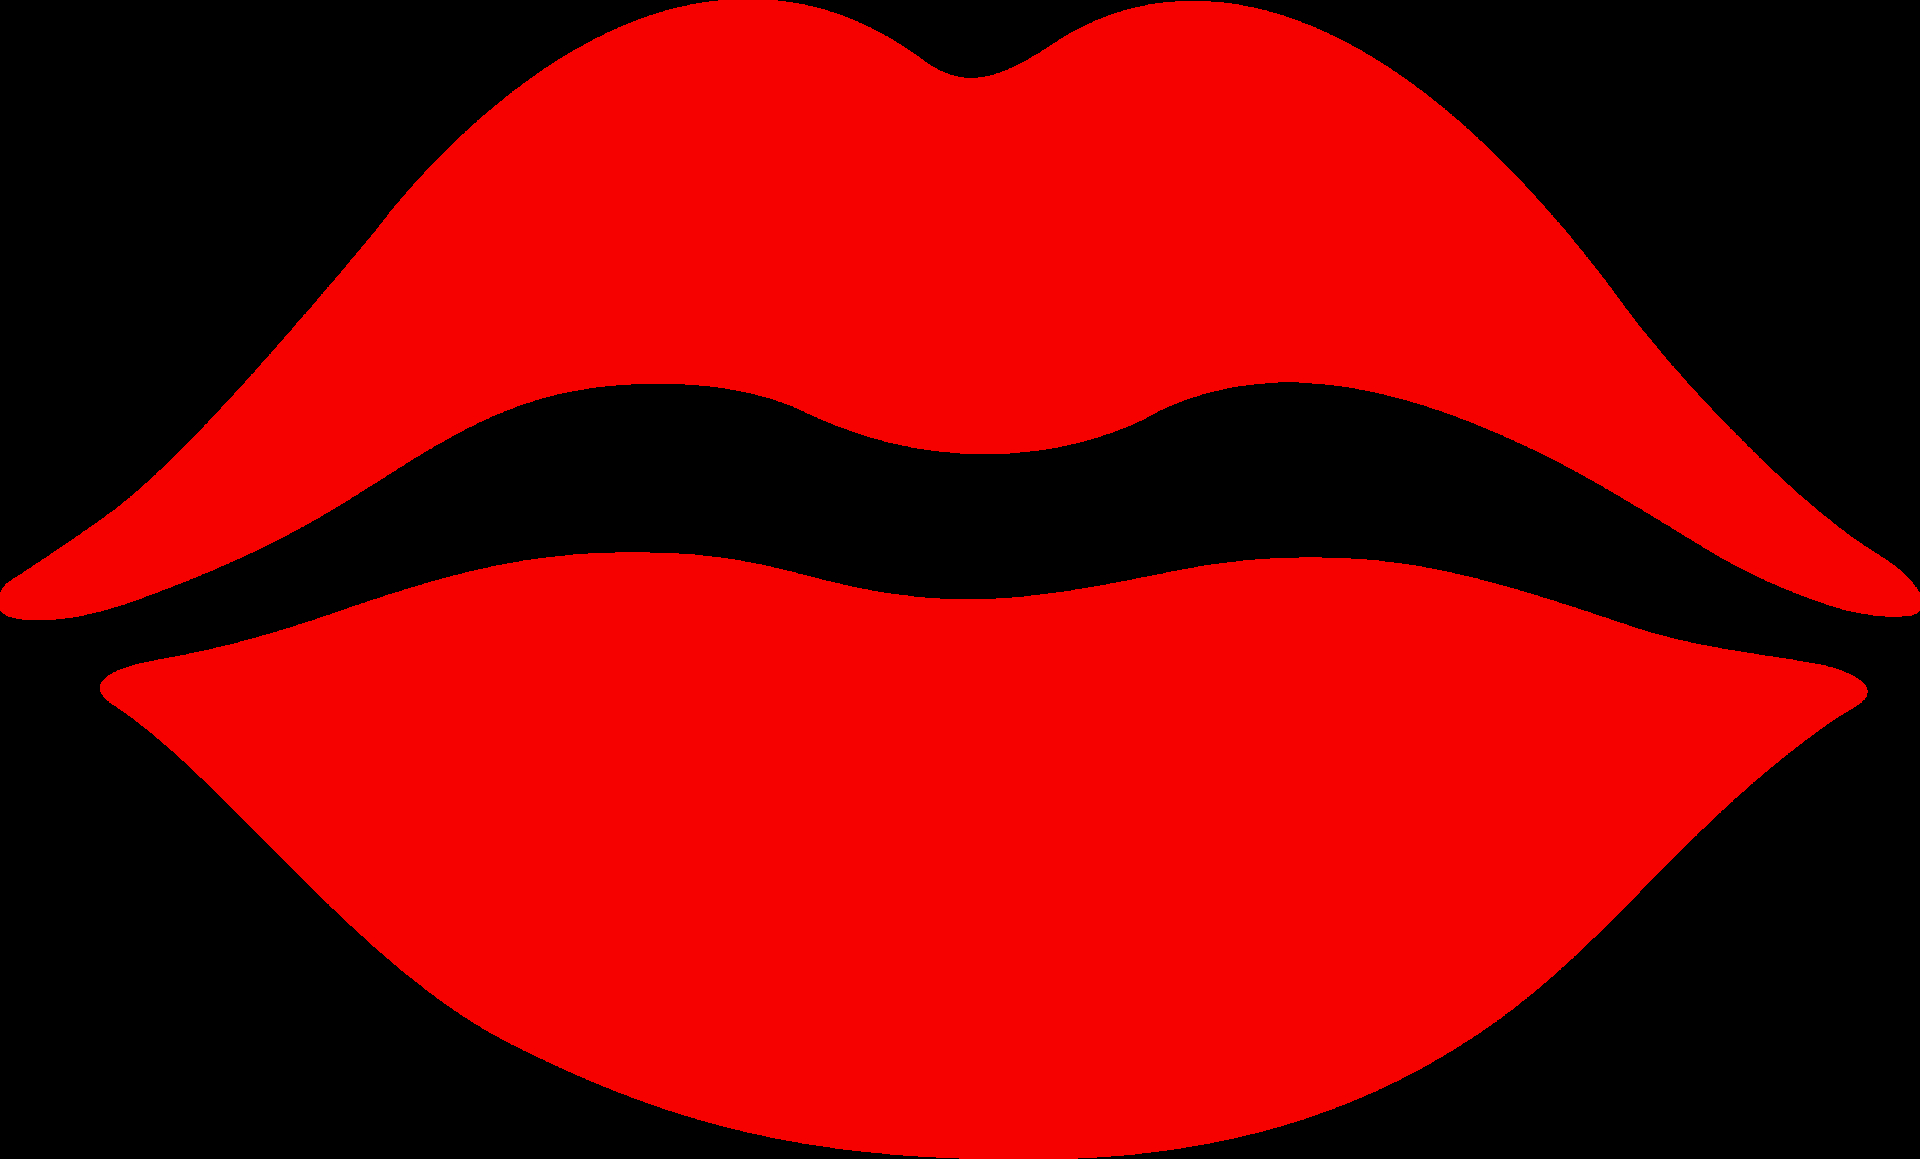 Kissing Lips Clipart 